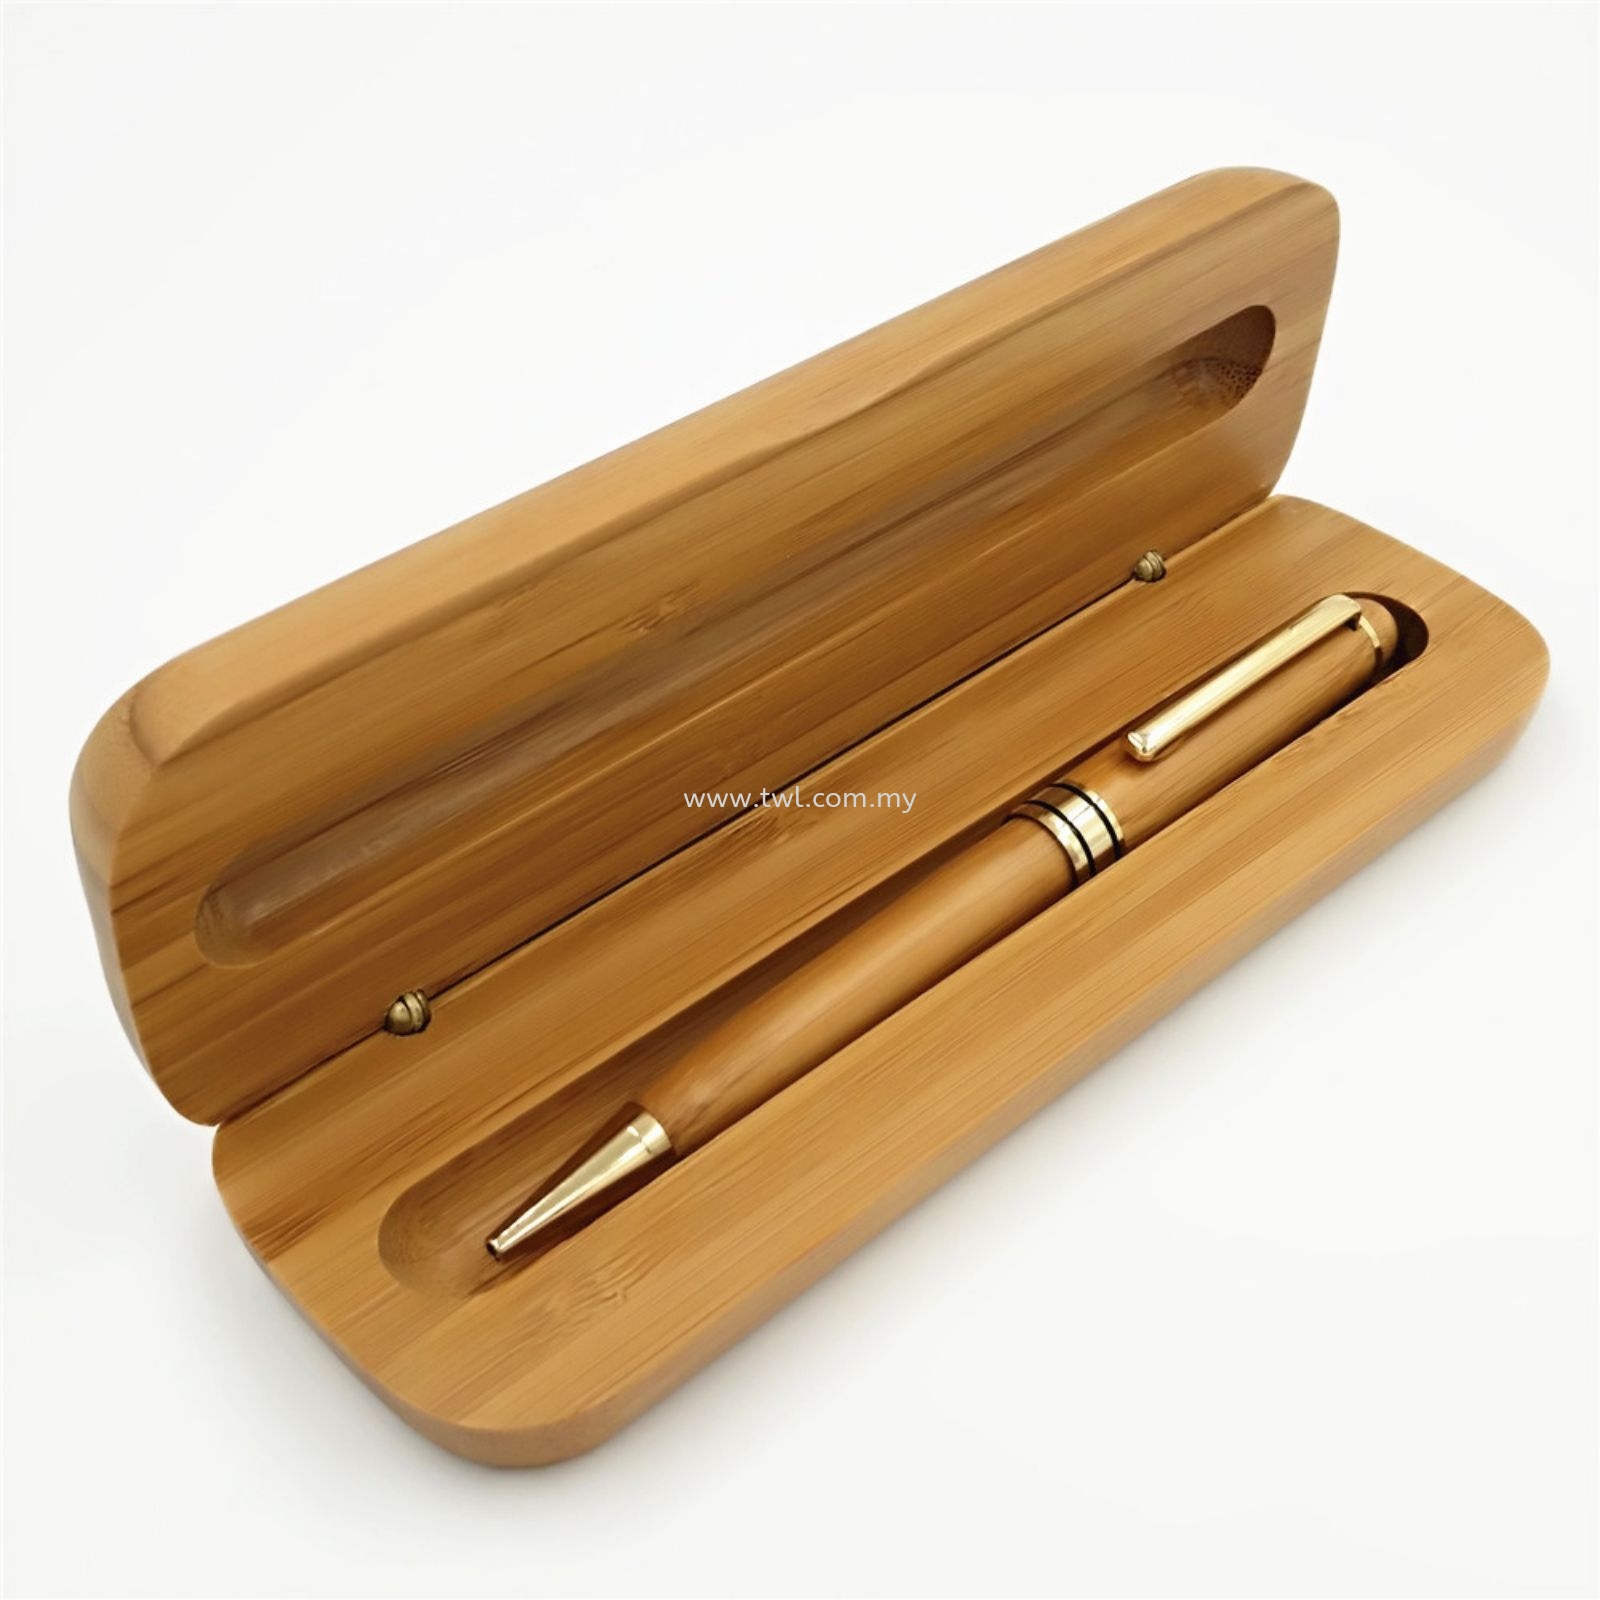 Customized Wooden Pen